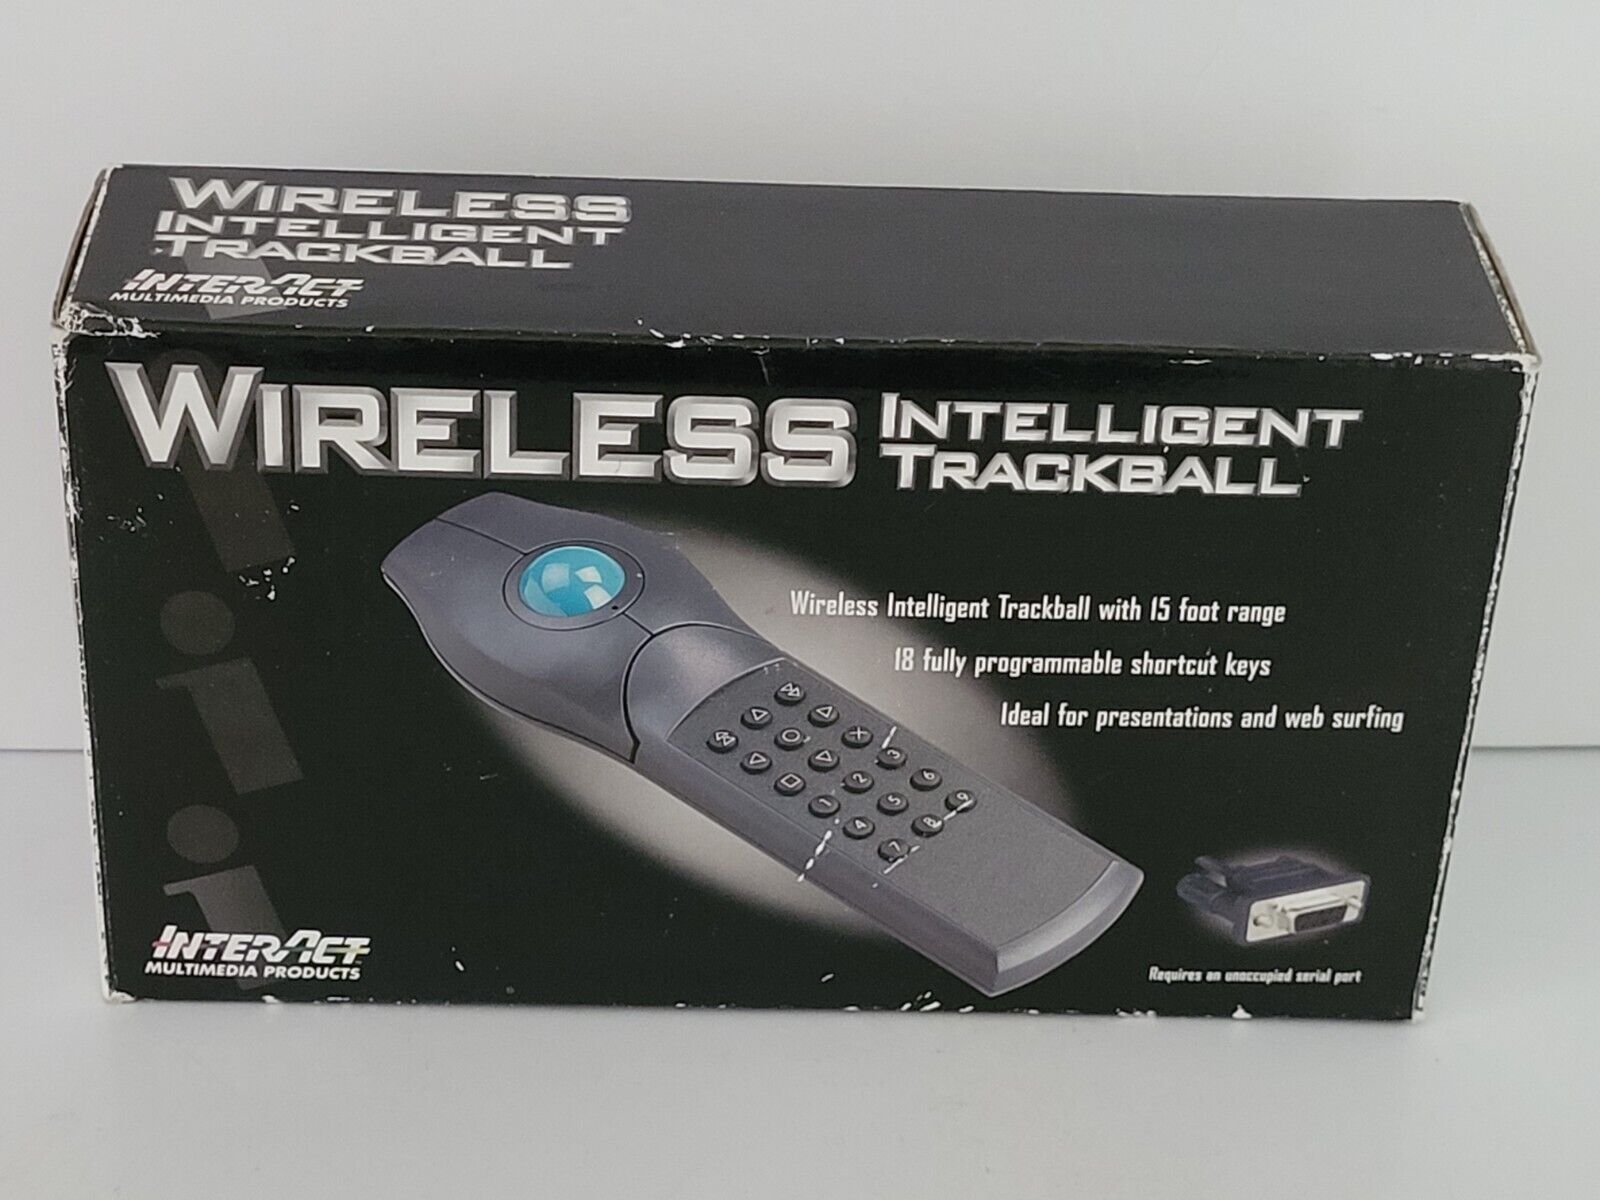 Vintage 1997 InterAct Wireless Intelligent Trackball Remote SV-2020 WINDOWS 